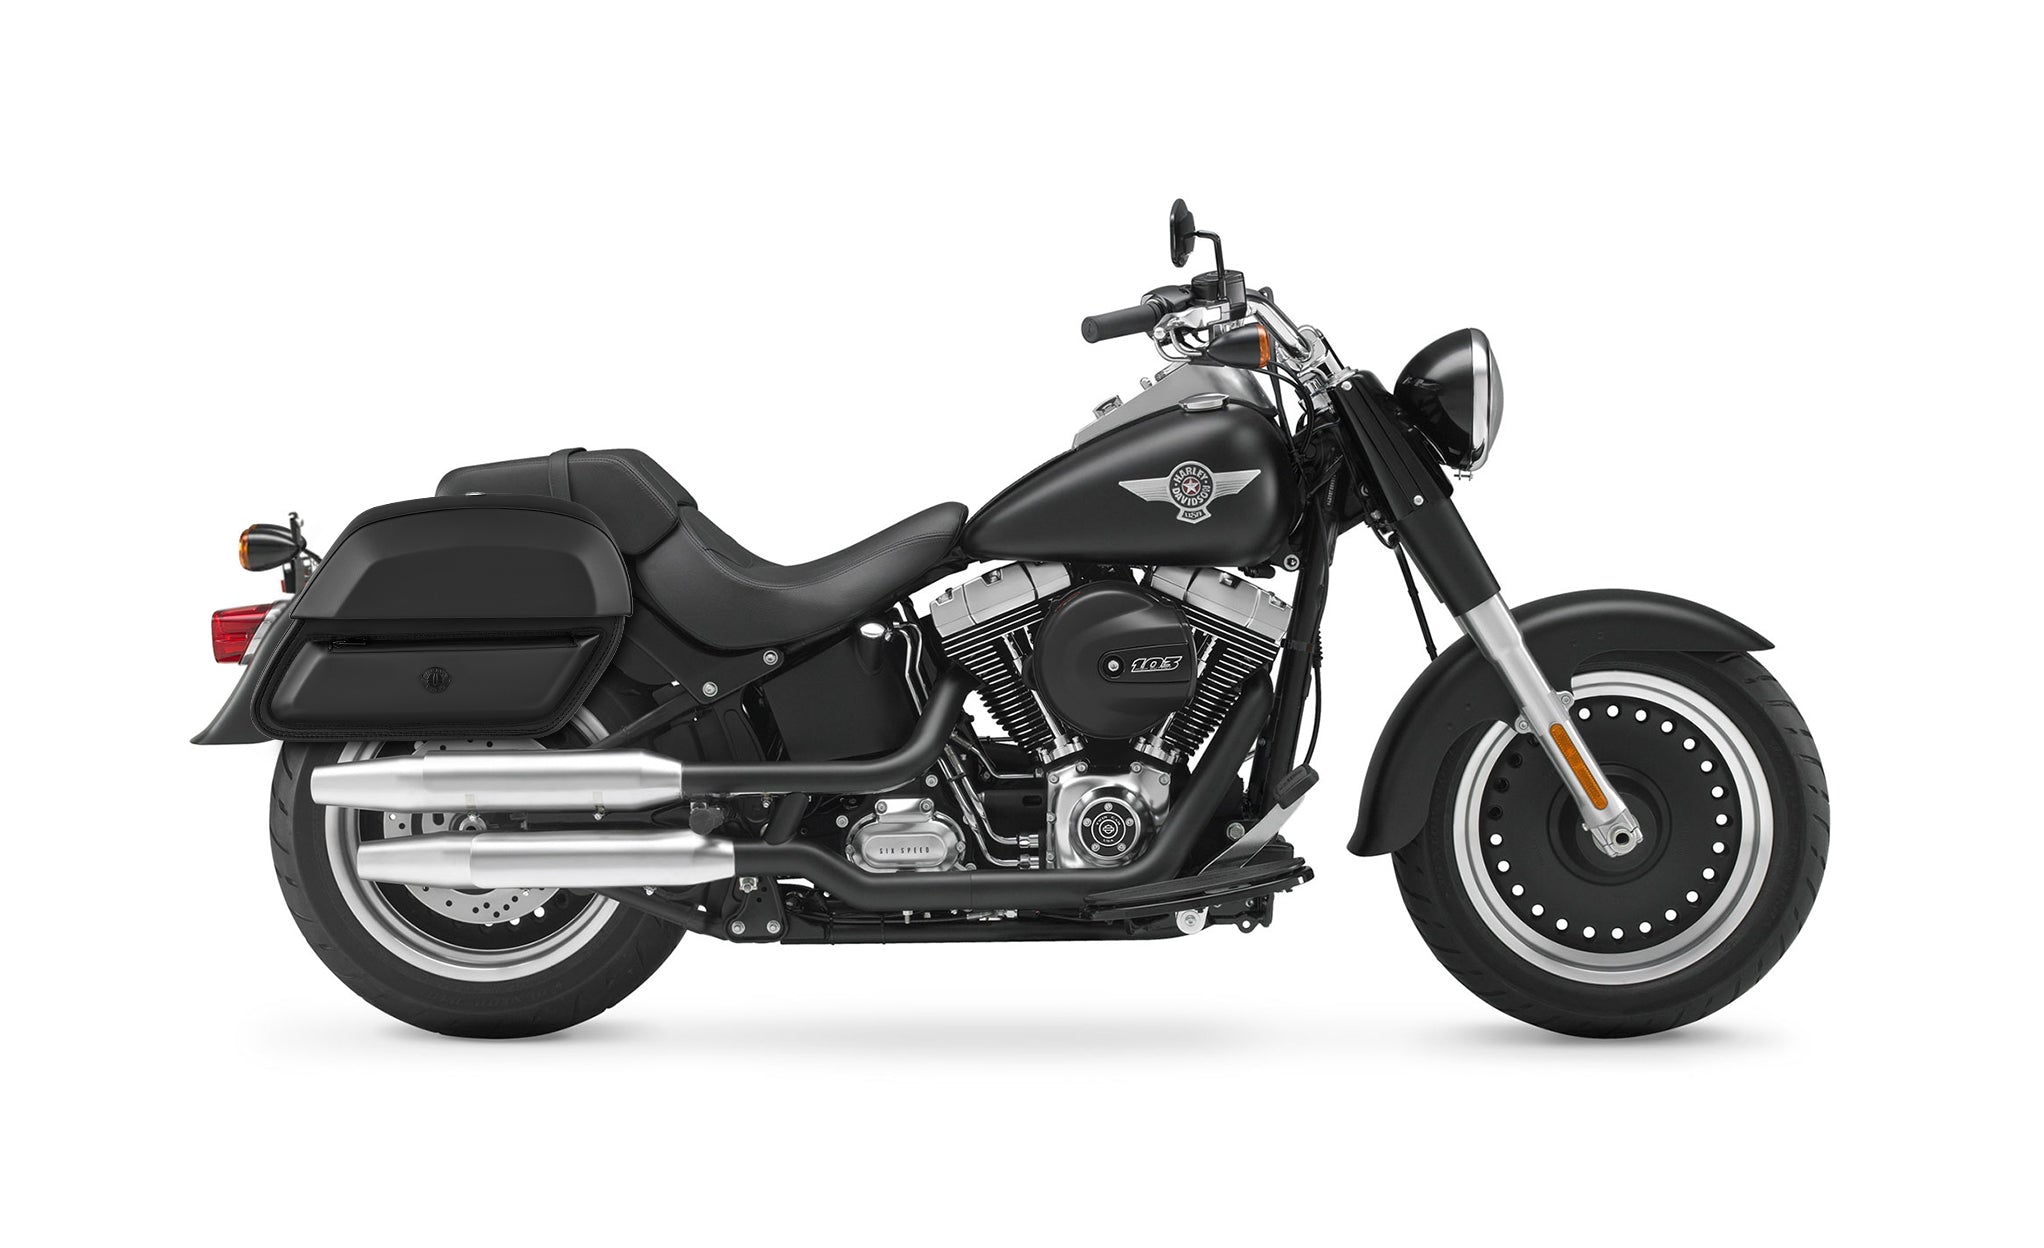 28L - Wraith Medium Leather Saddlebags for Harley Softail Fat Boy Lo FLSTFB BAG on Bike View @expand